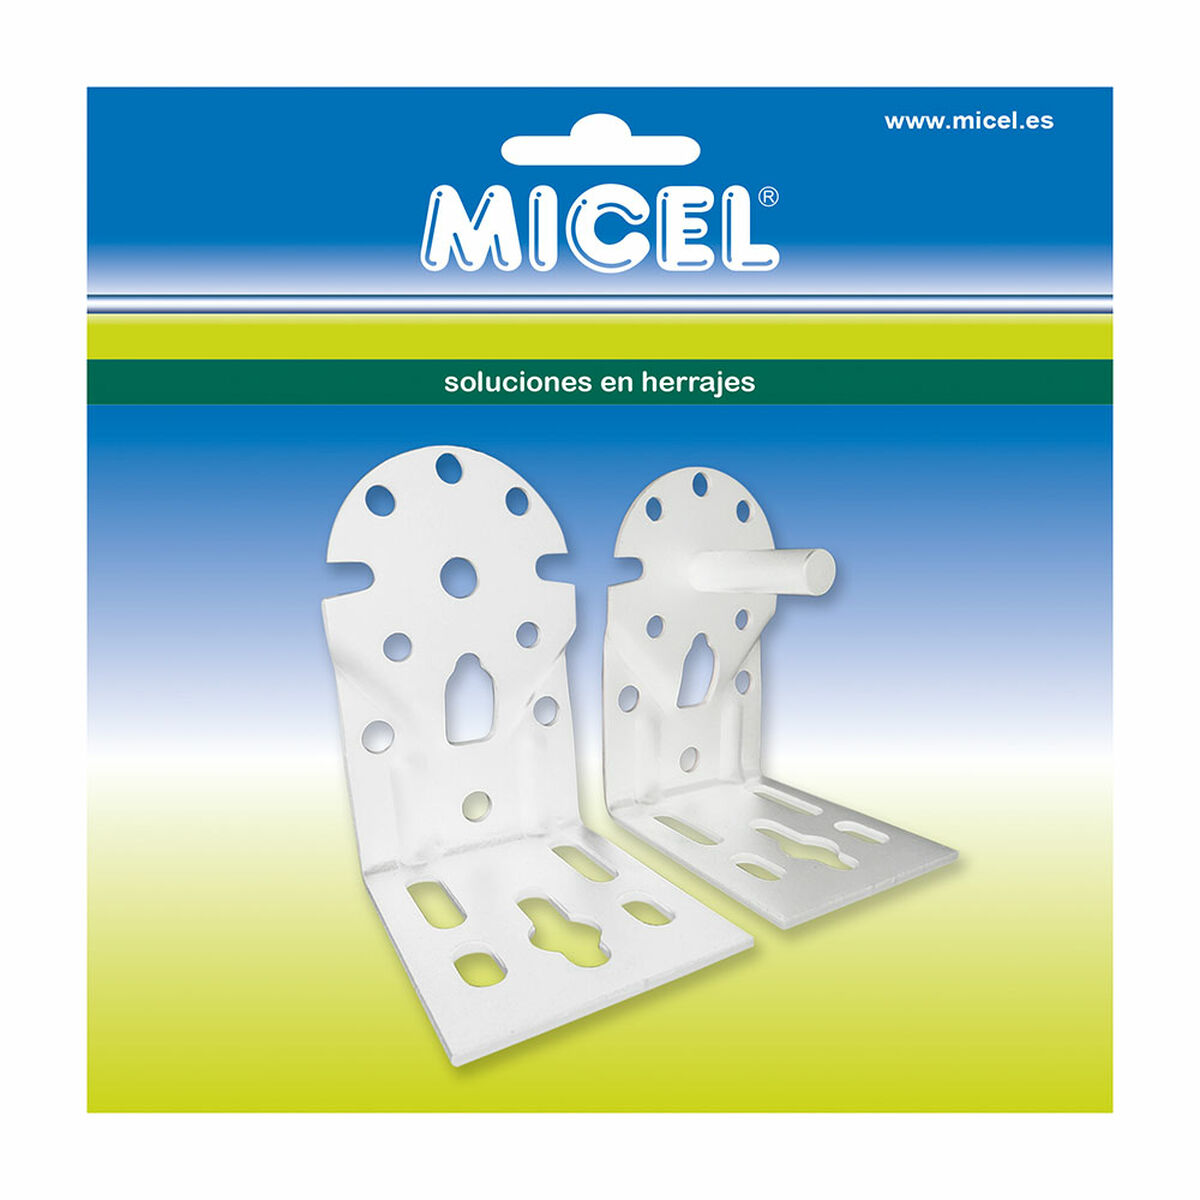 Awning support Micel TLD08 Vit 6,5 x 8,6 x 10,8 cm 2 Delar Axel